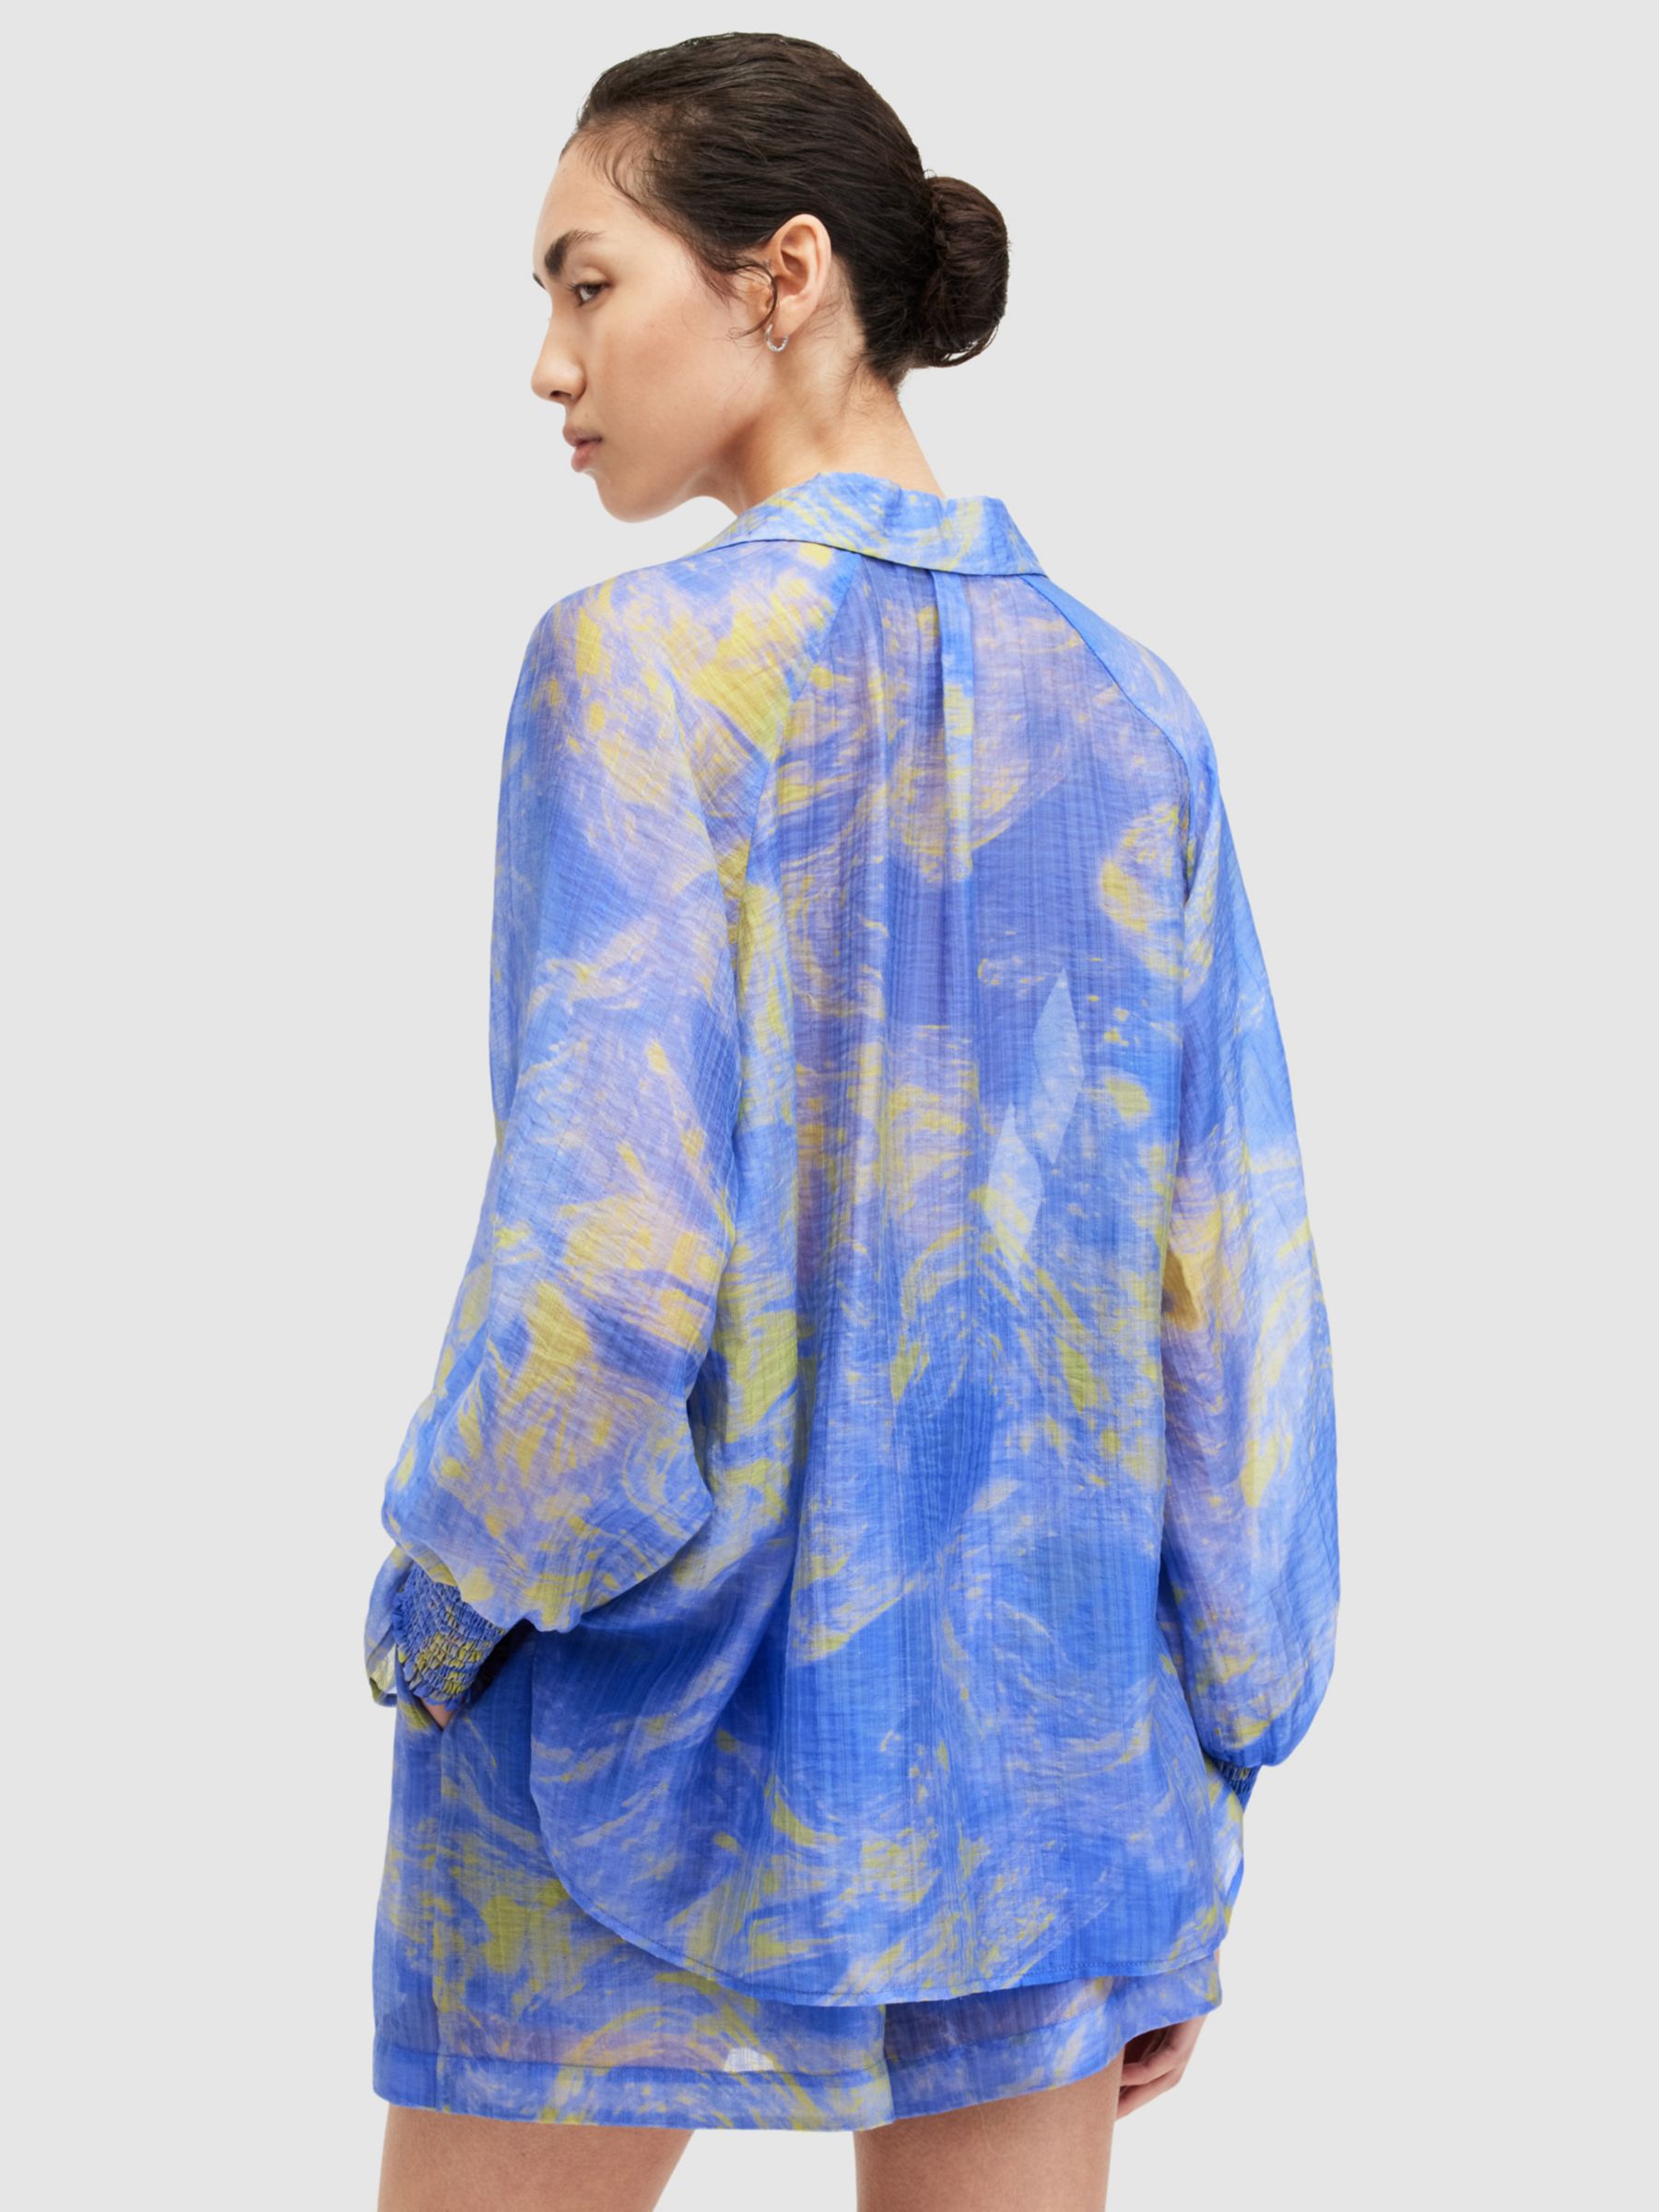 AllSaints Isla Inspiral Abstract Print Shirt, Electric Blue/Yellow, 10